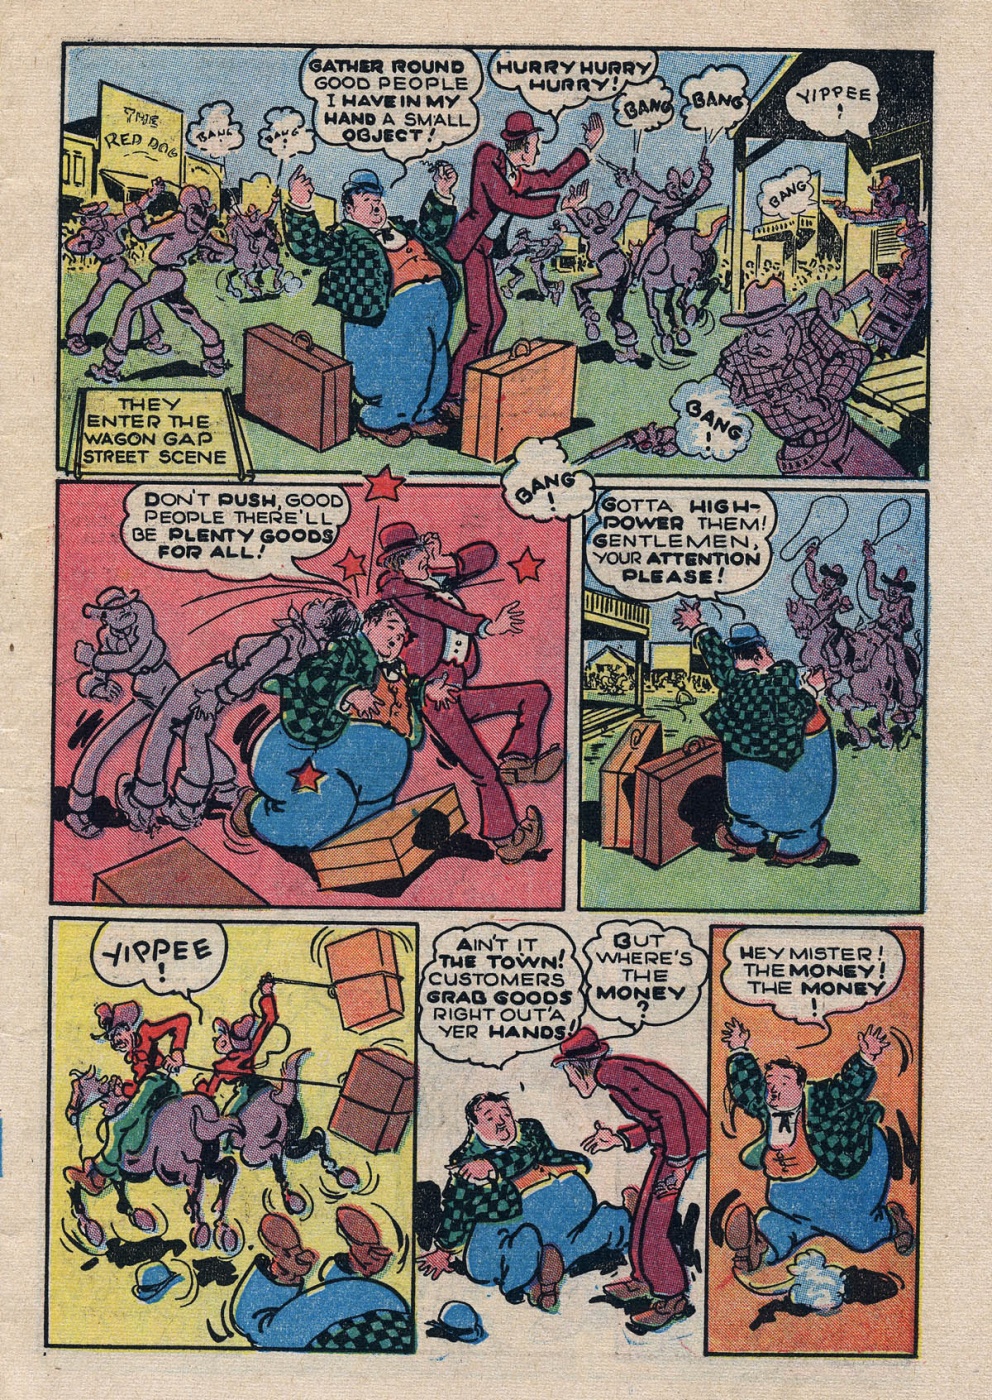 Funny Comic Strips - Abbott and Costello 001 (Feb 1948) 5